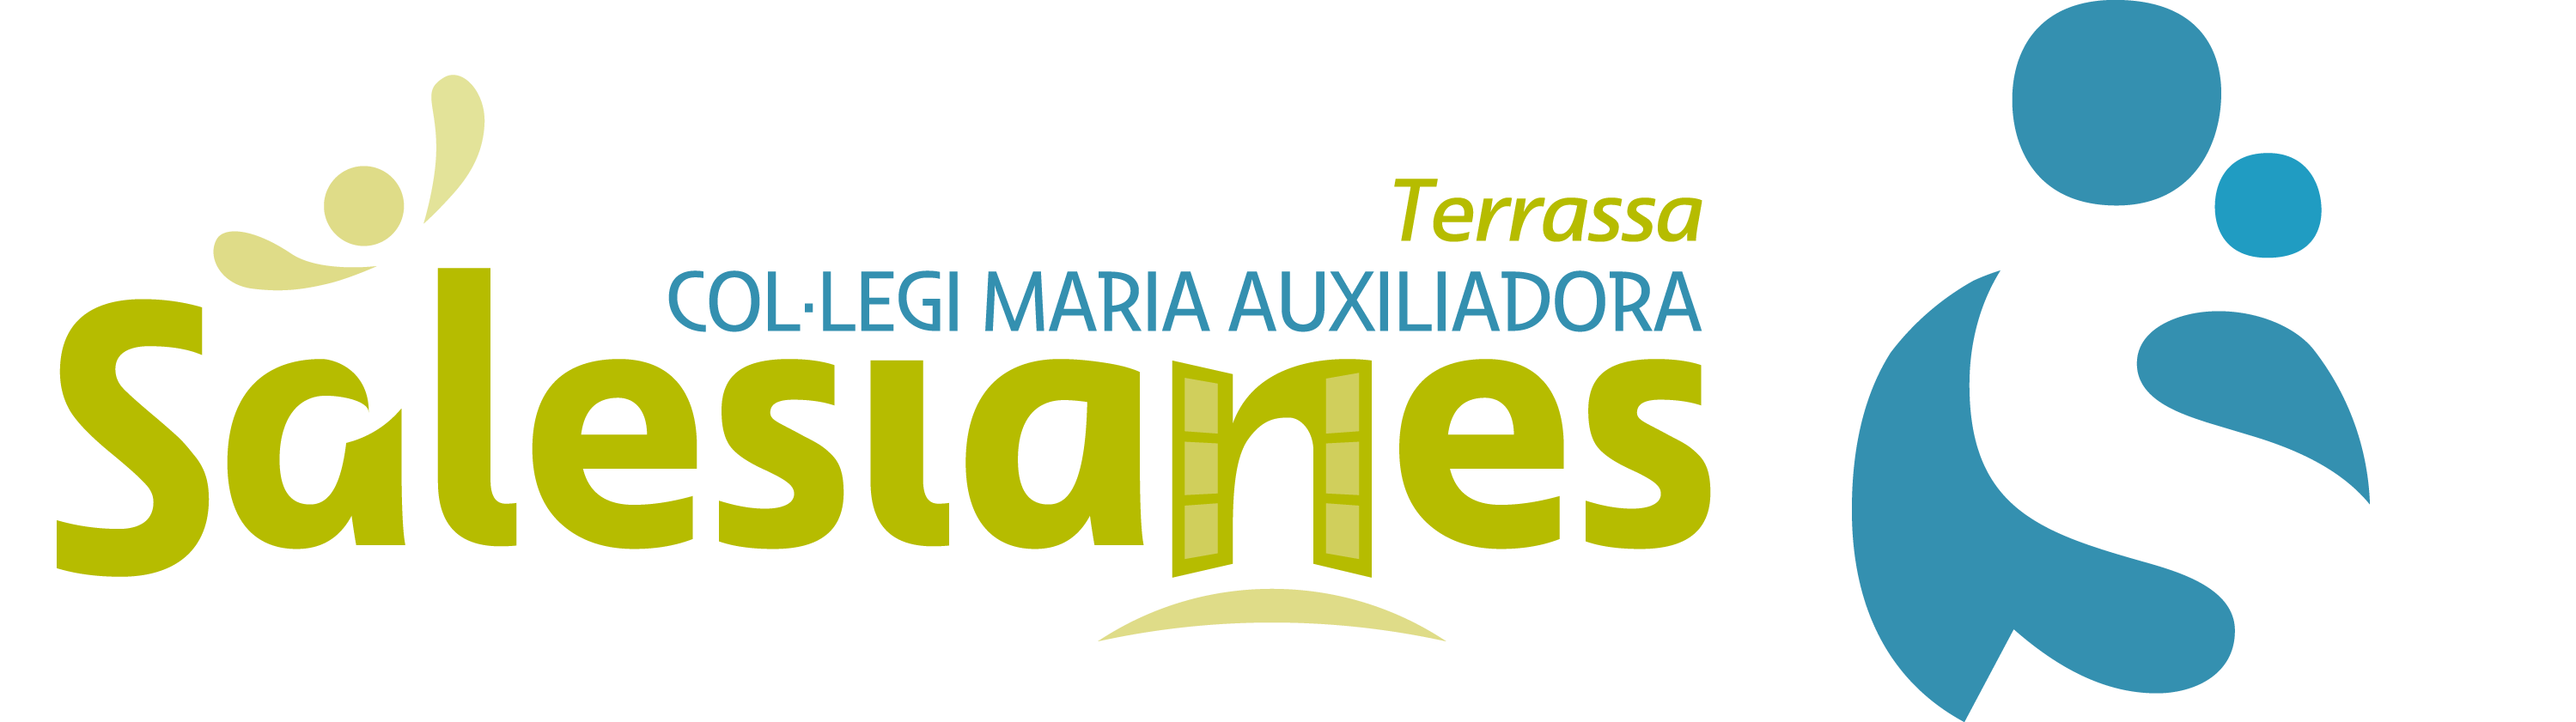 Col·legi Maria Auxiliadora – Terrassa